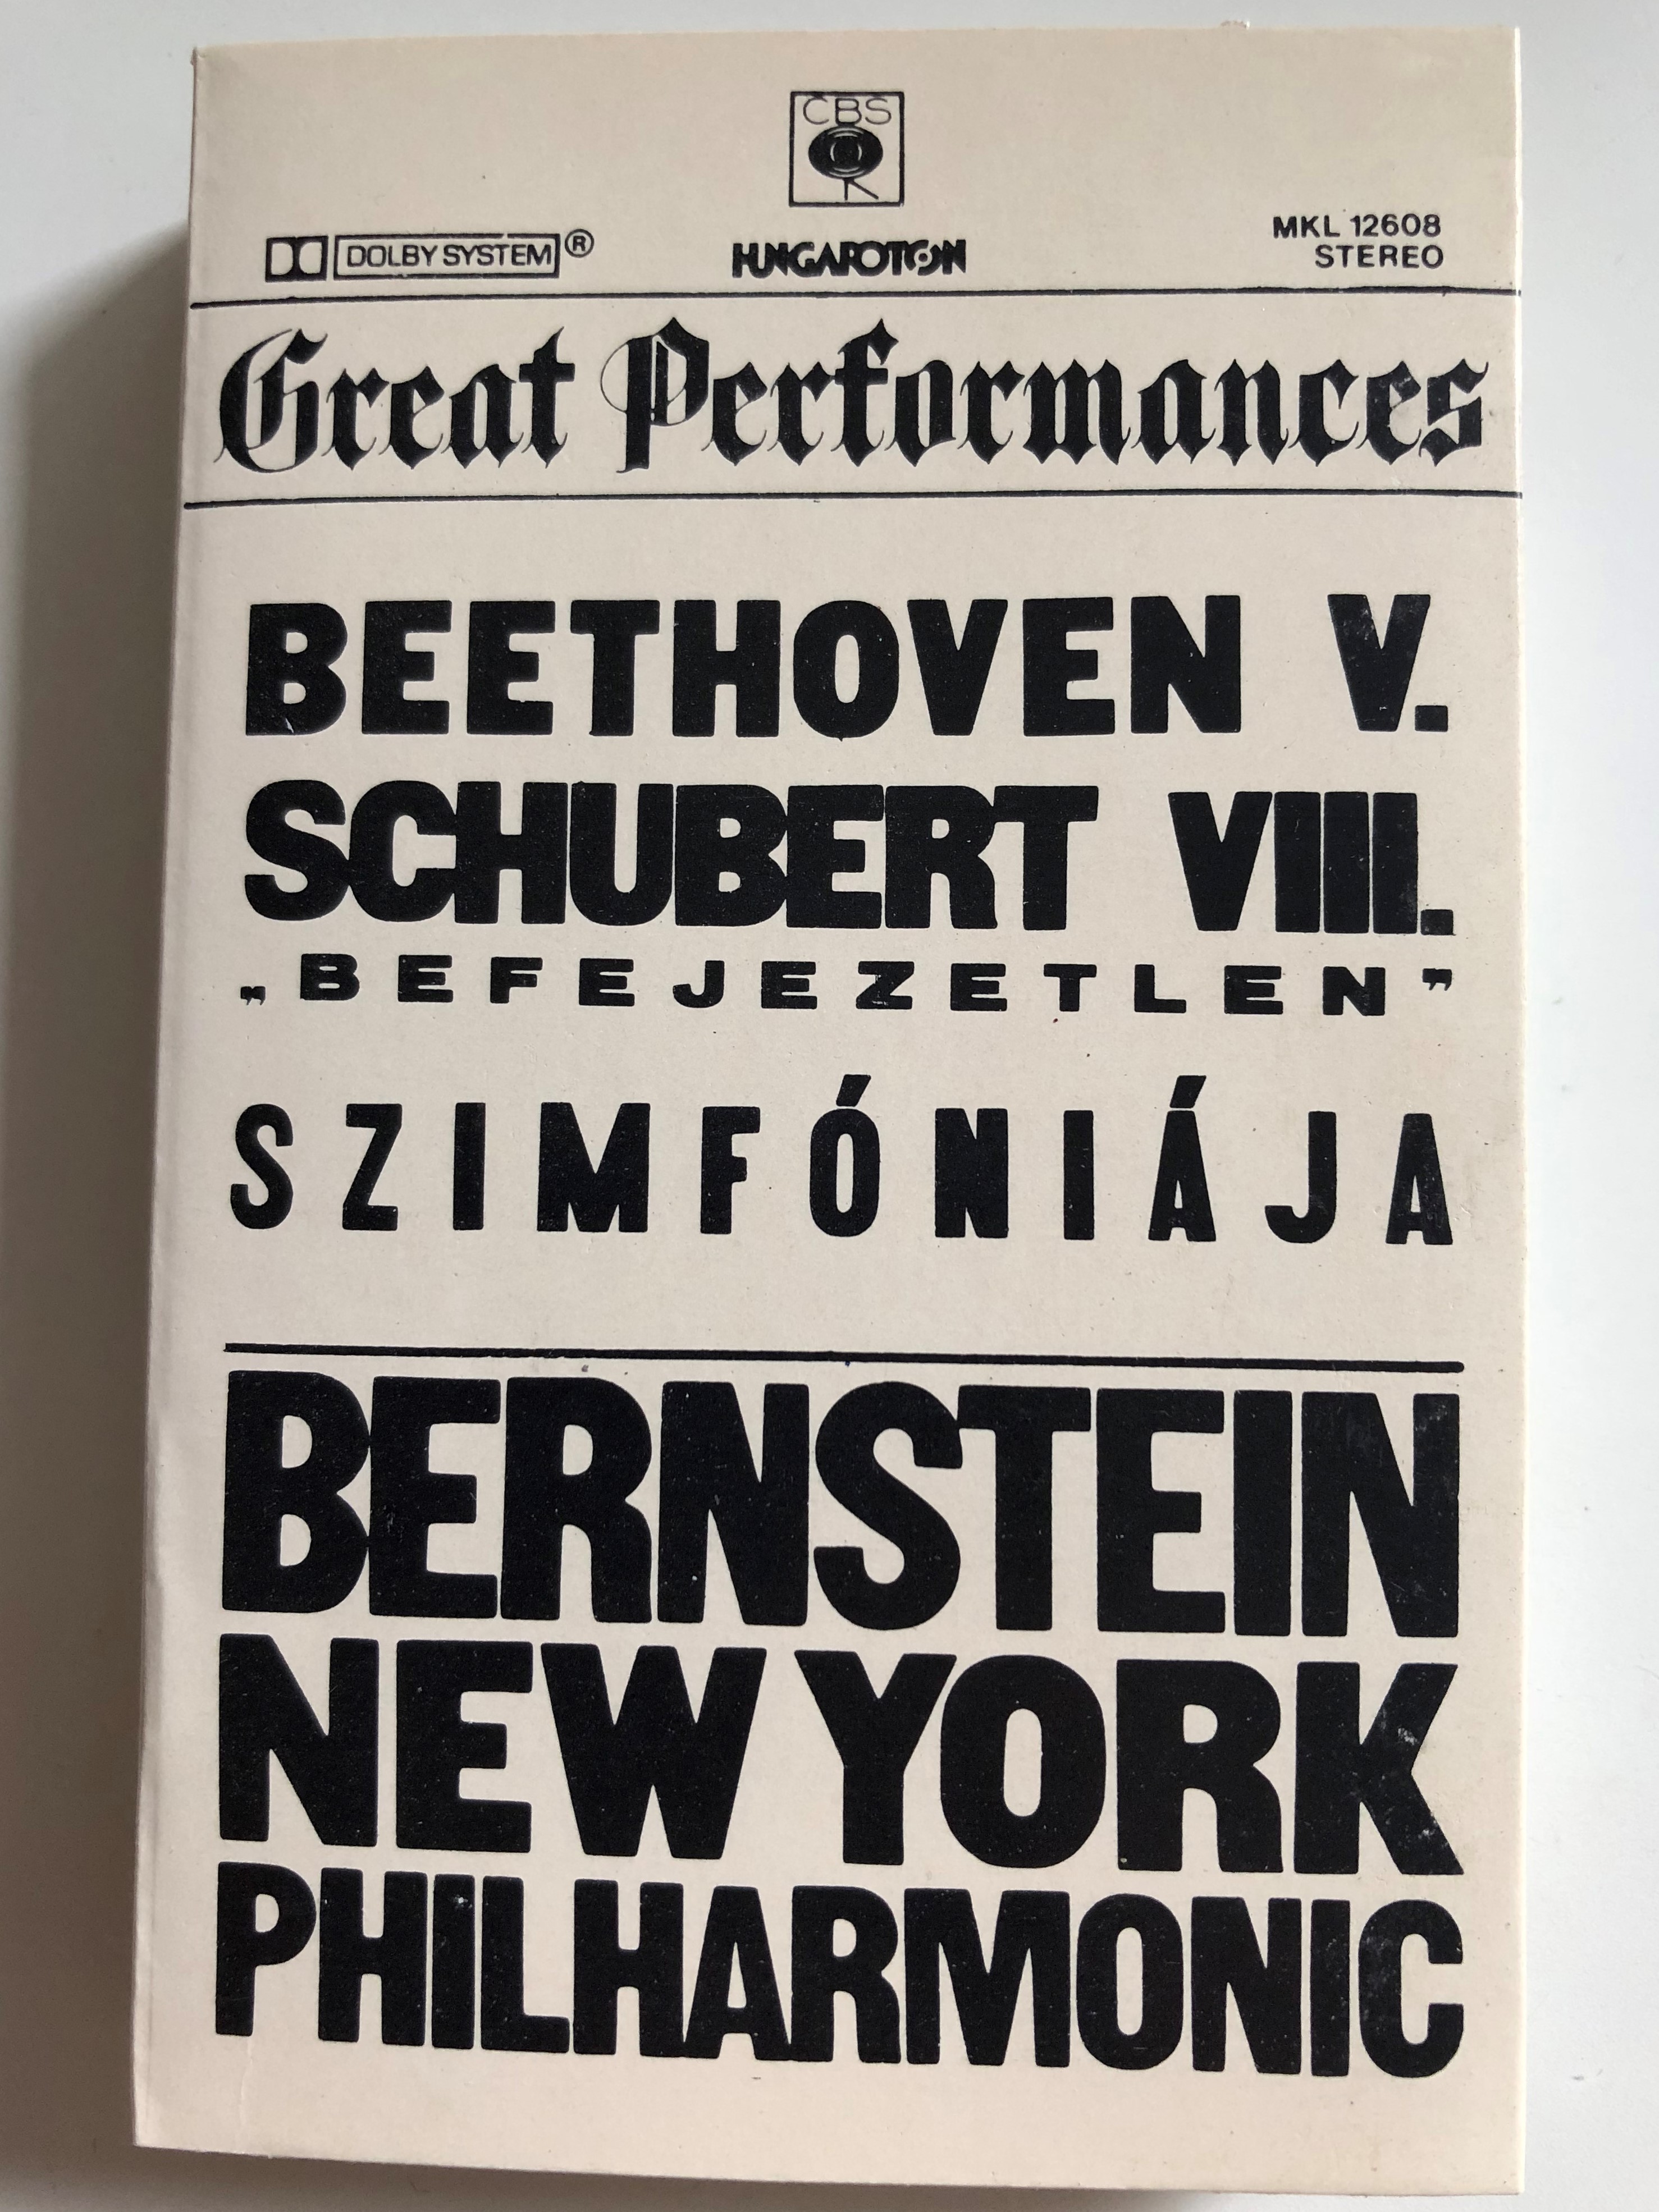 great-preformances-beethoven-v.-schubert-viii.-befejezetlen-szimf-ni-ja-bernstein-new-york-philharmonic-hungaroton-cassette-stereo-mkl-12608-1-.jpg